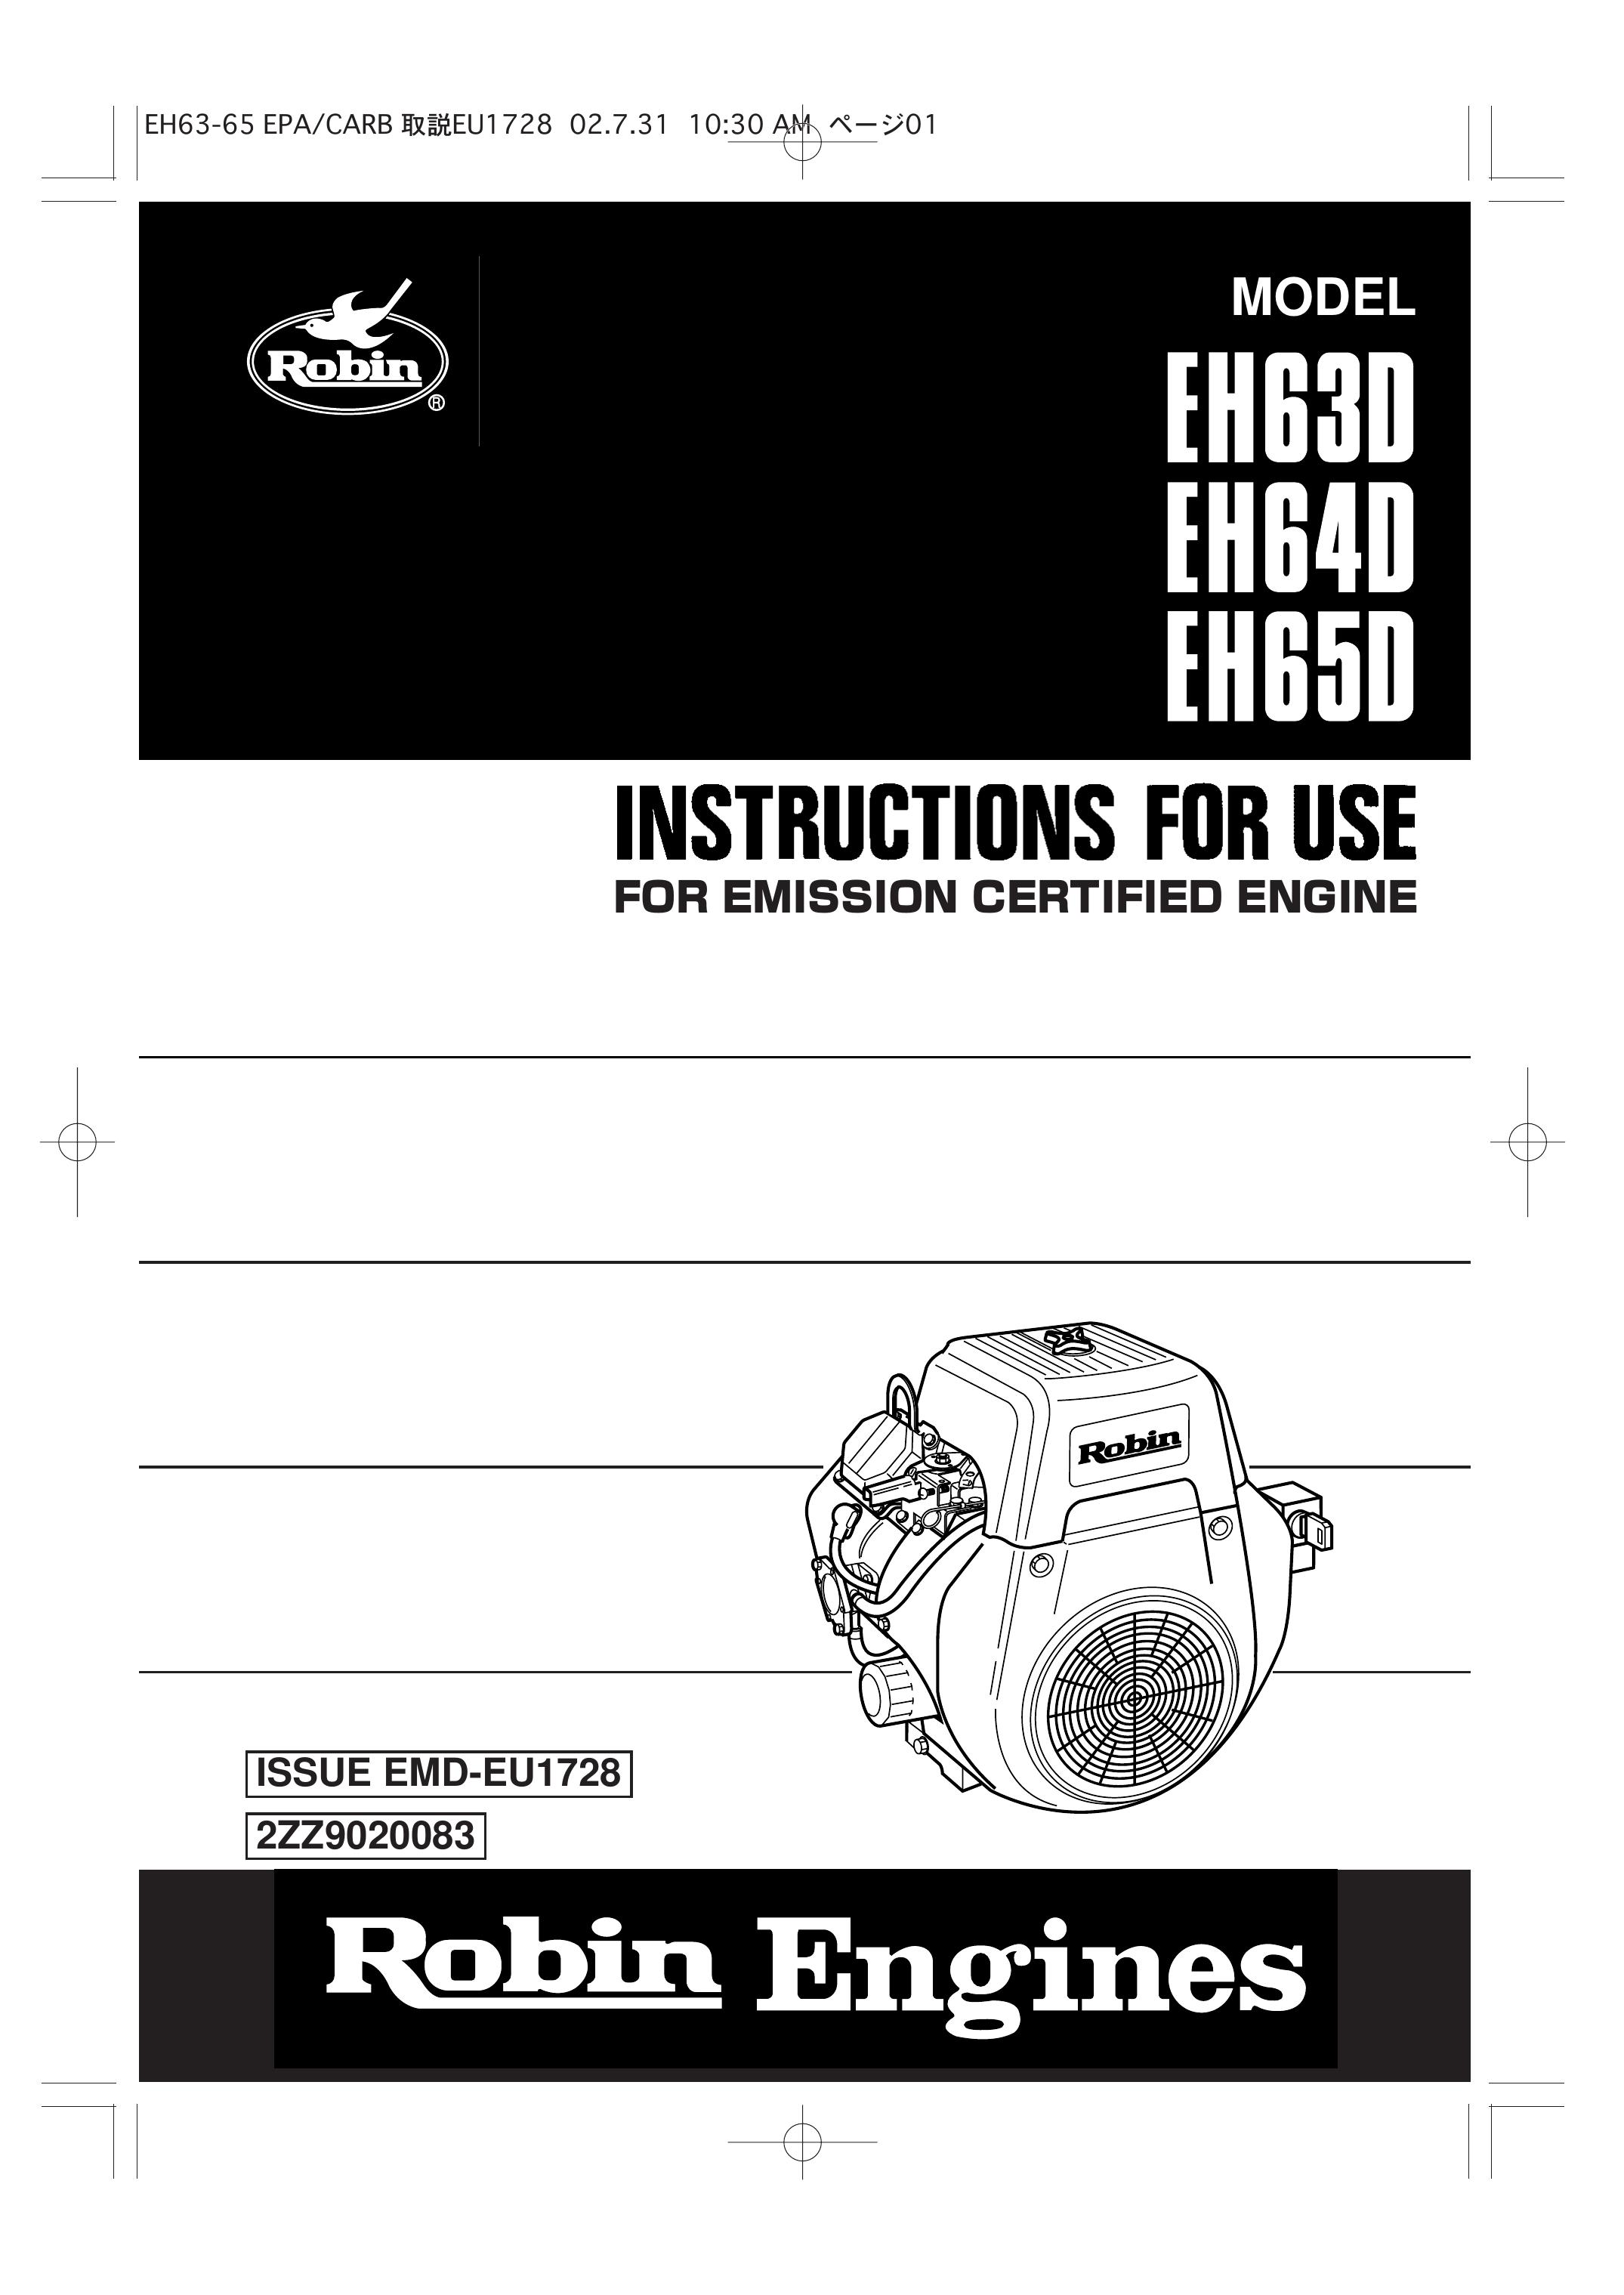 Subaru Robin Power Products EH64D Portable Generator User Manual